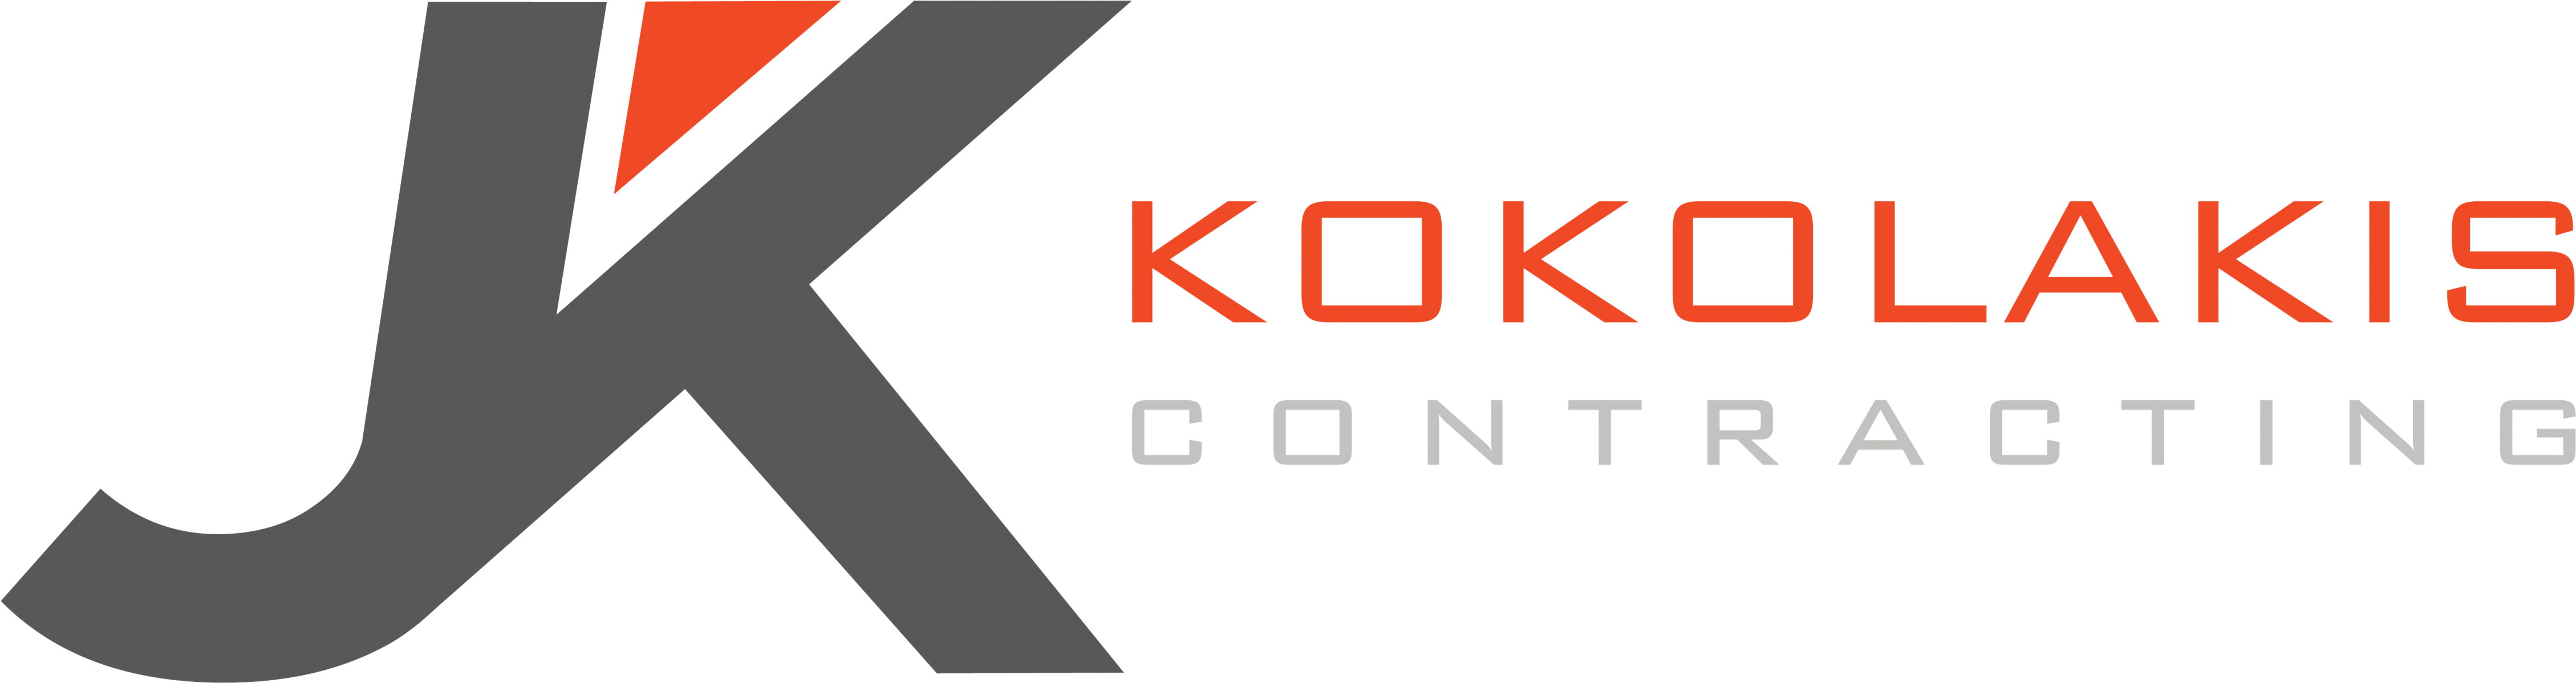 Kokolakis Contracting - Orange Clipart (4688x1346), Png Download